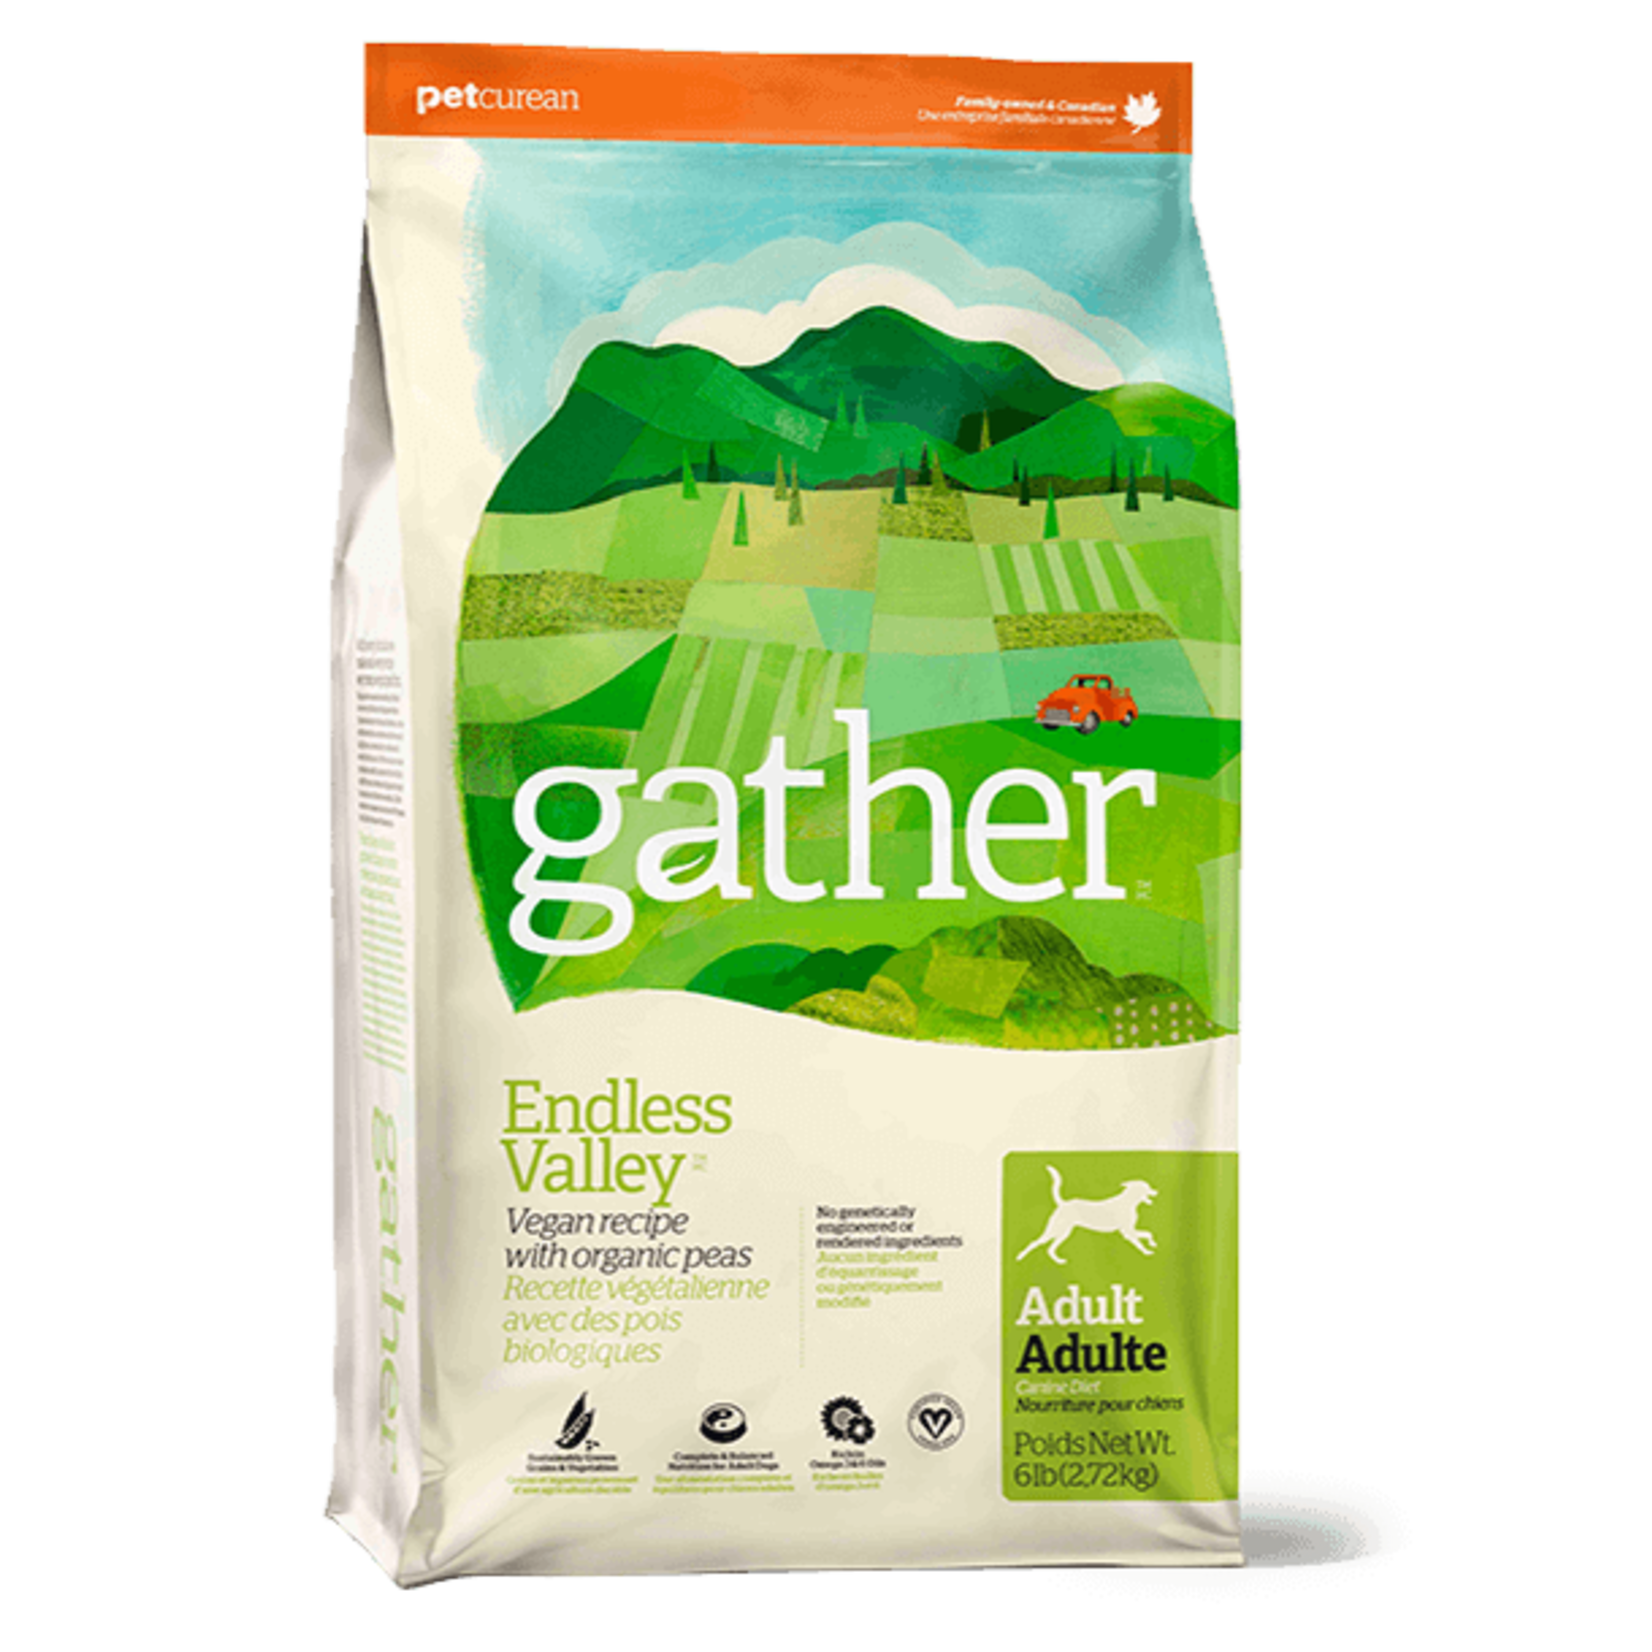 Petcurean GATHER - Endless Valley Vegan Dry Dog Food